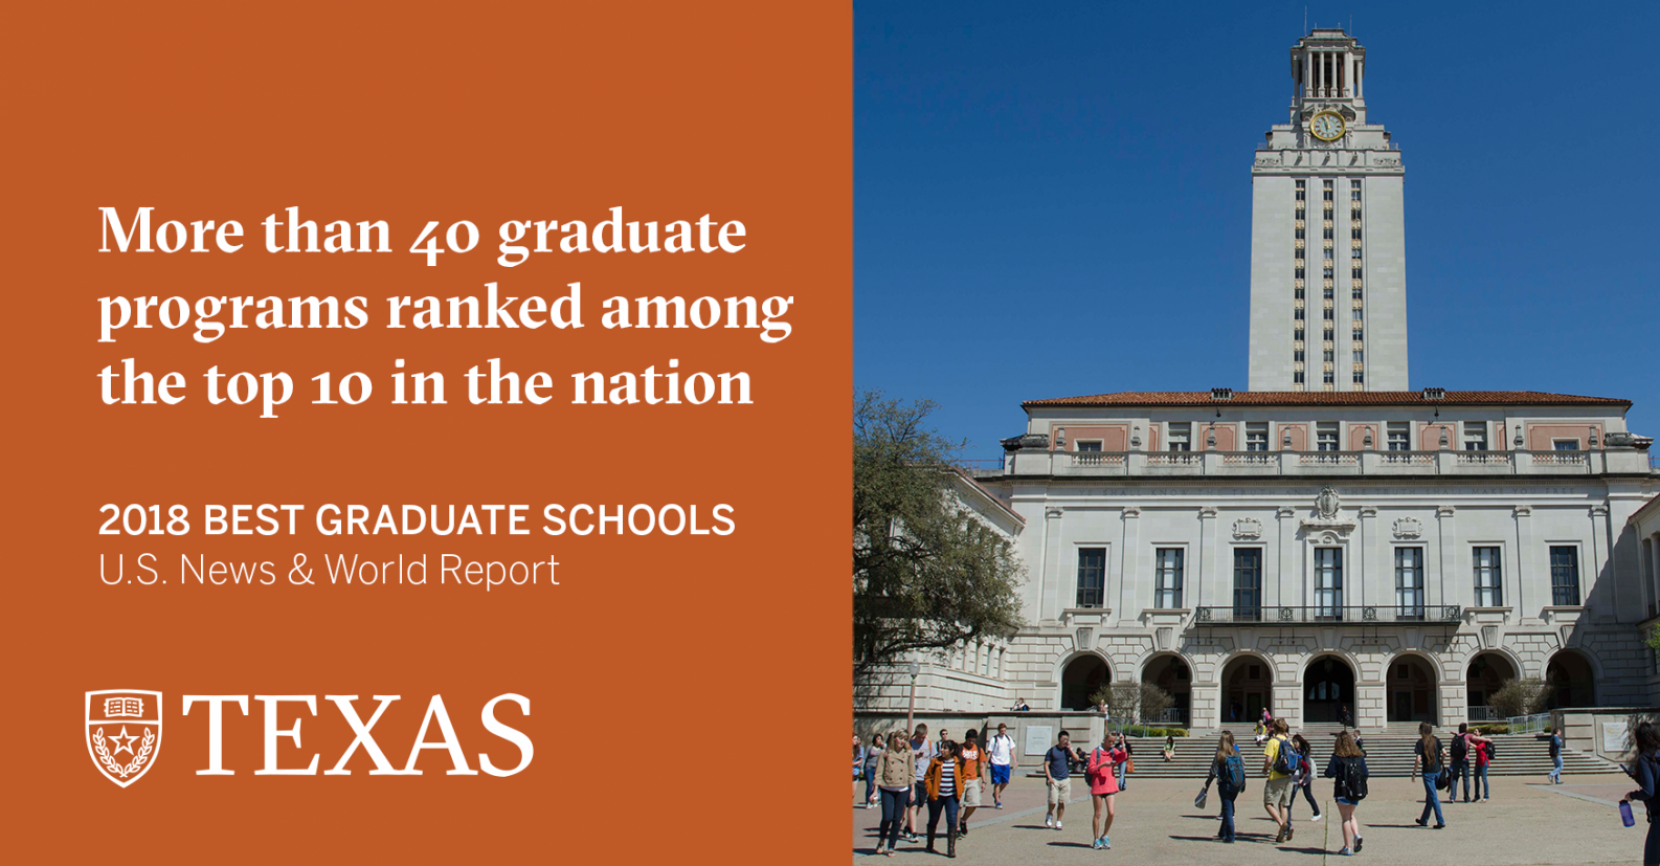 Ut Austin Has 49 Top 10 Programs In U S News Ranking Of Graduate Schools Ut News